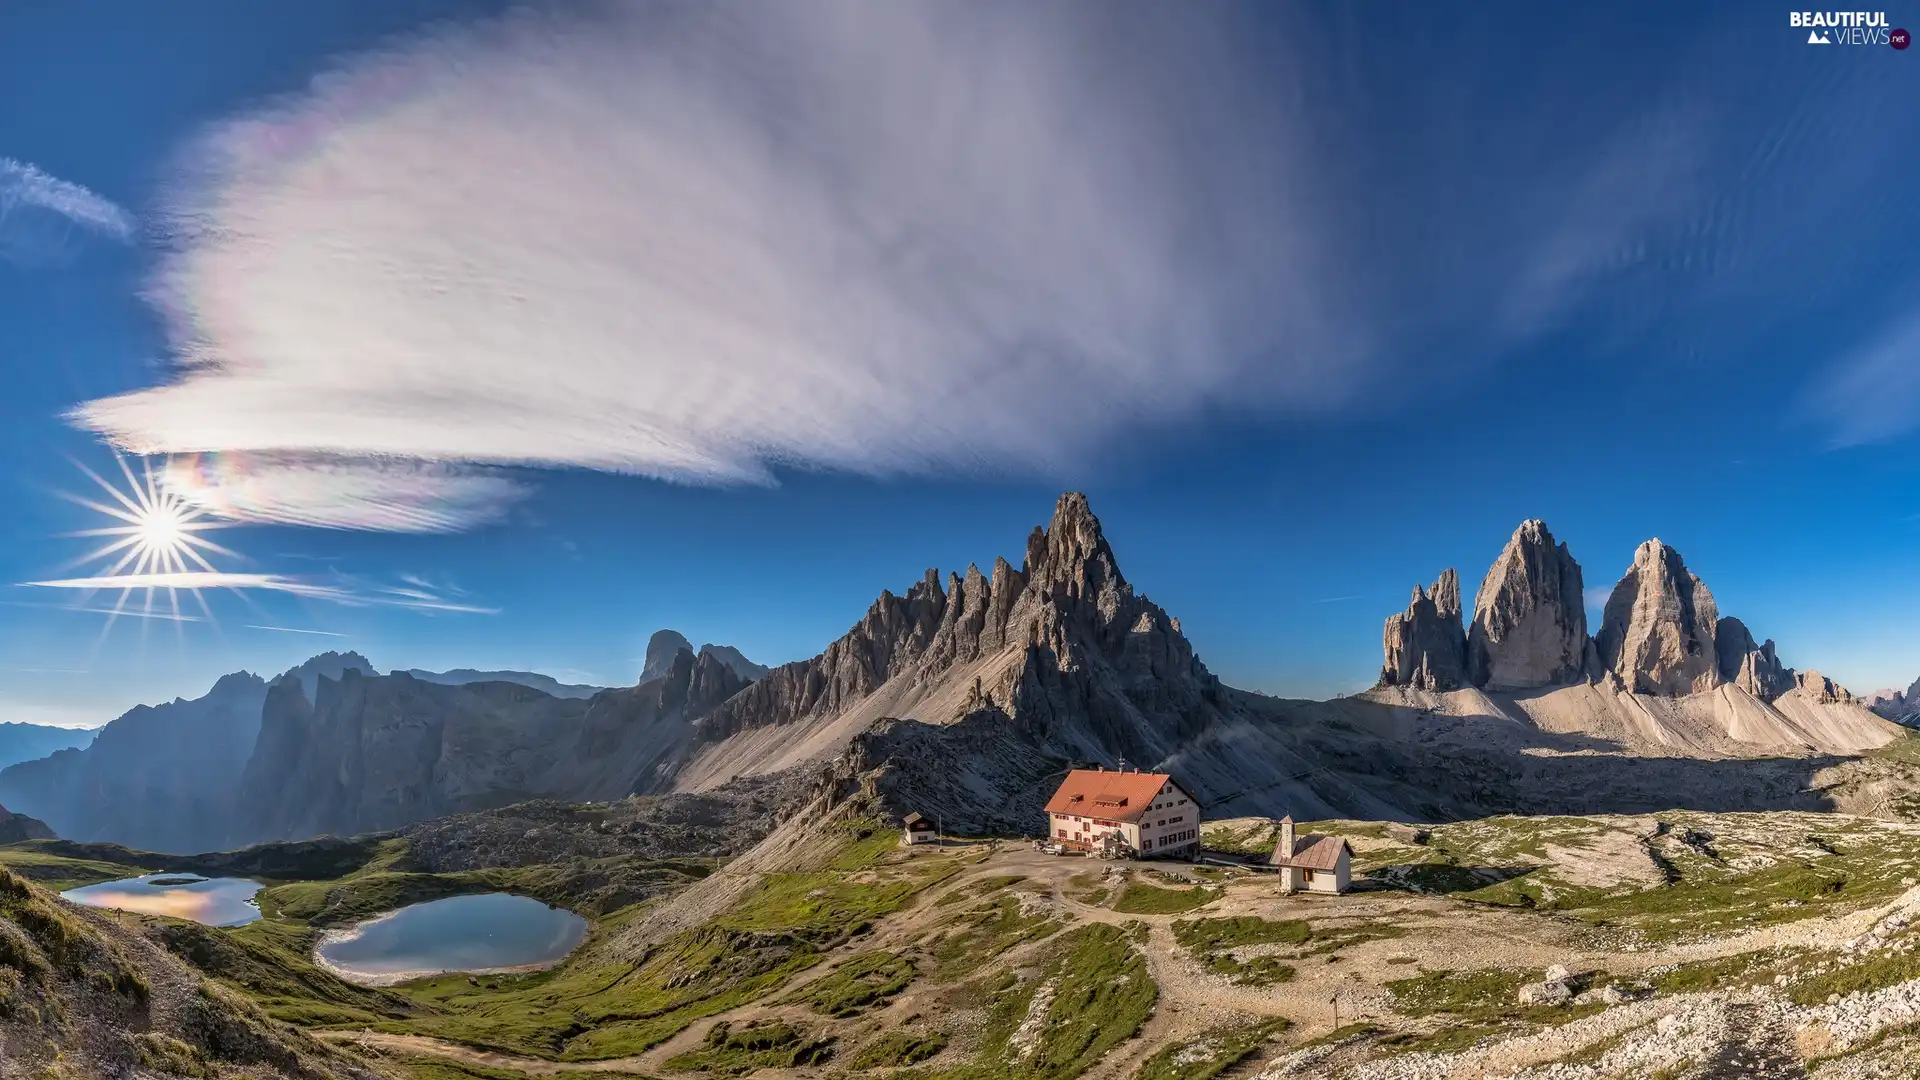 Paternkofel Mountain, Mountains Tre Cime di Lavaredo, lakes, Hostel Dreizinnen Hut, clouds, Dolomites, Italy, rays of the Sun